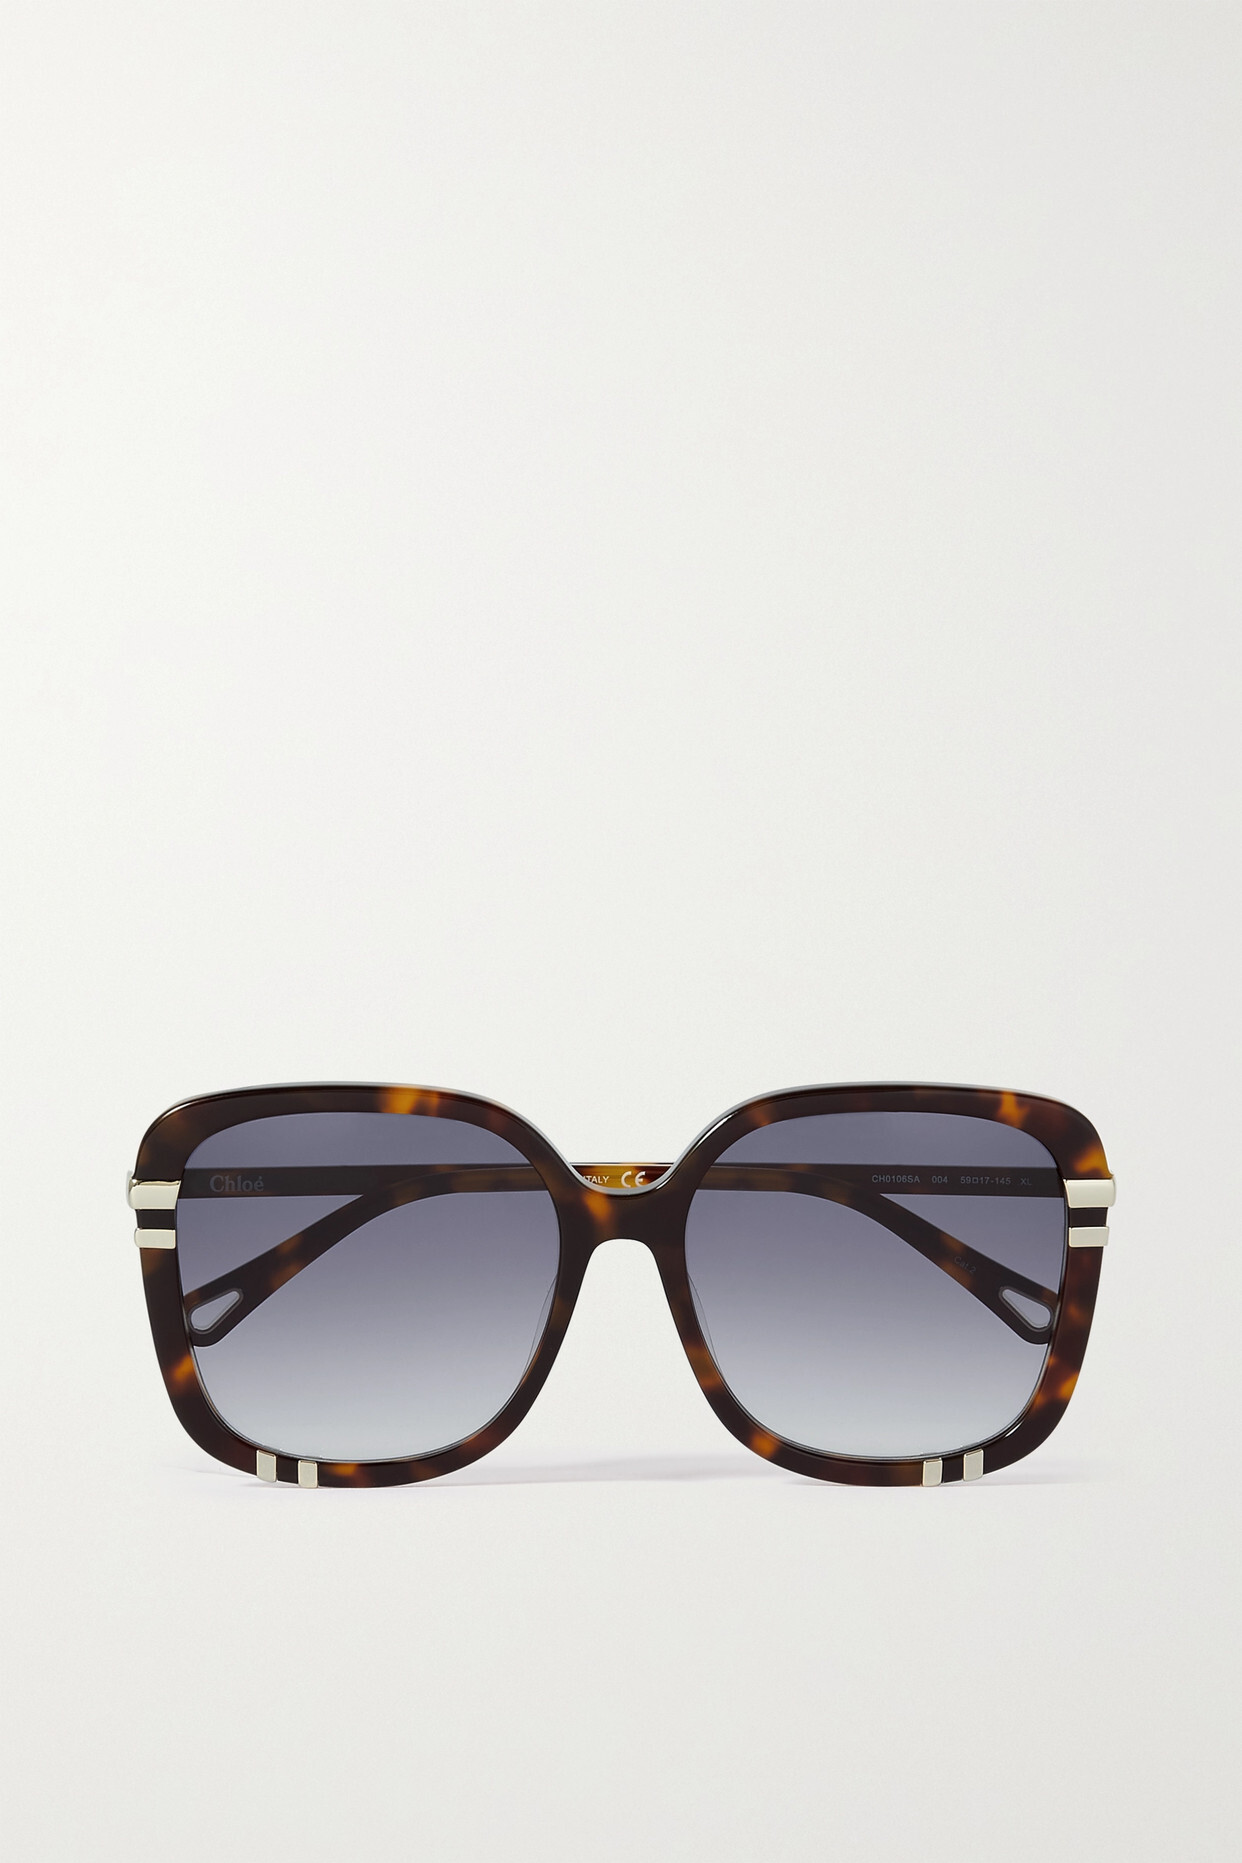 Chloé Chloé - West Oversized D-frame Tortoiseshell Bio-acetate Sunglasses - One size